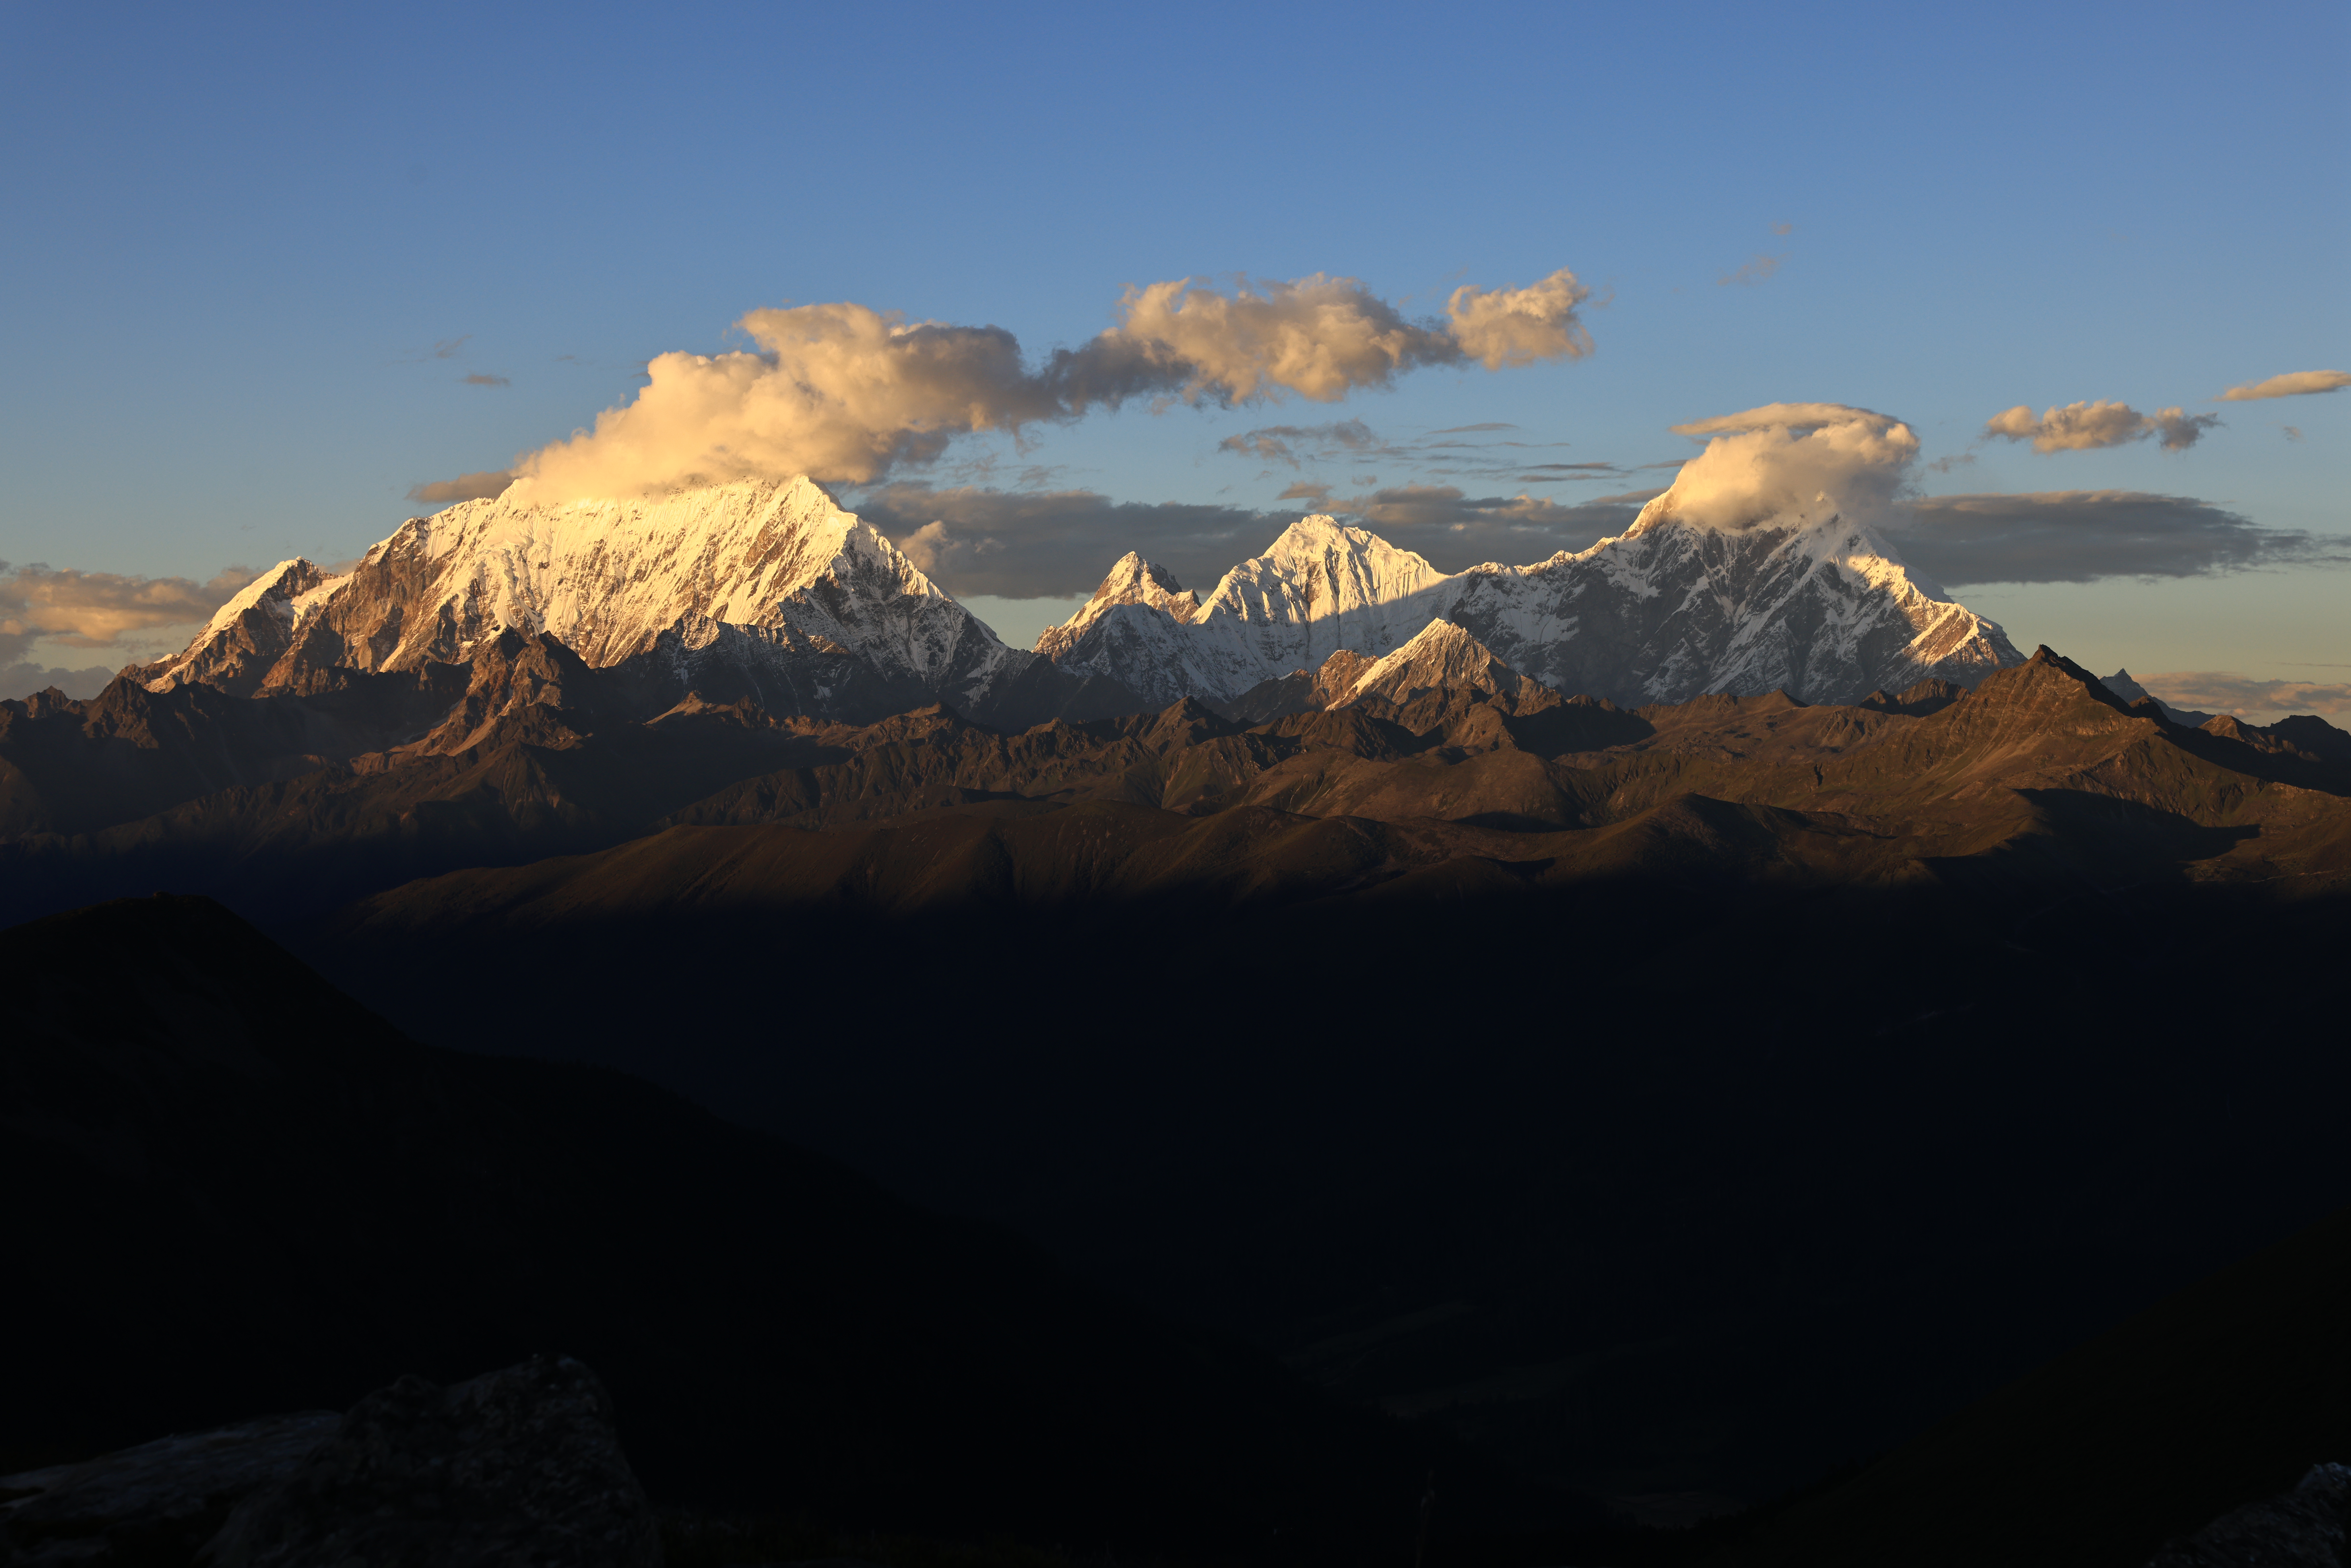 General 8192x5464 Tibet clouds mountains snow nature sky sunset landscape sunset glow sunlight snowy mountain